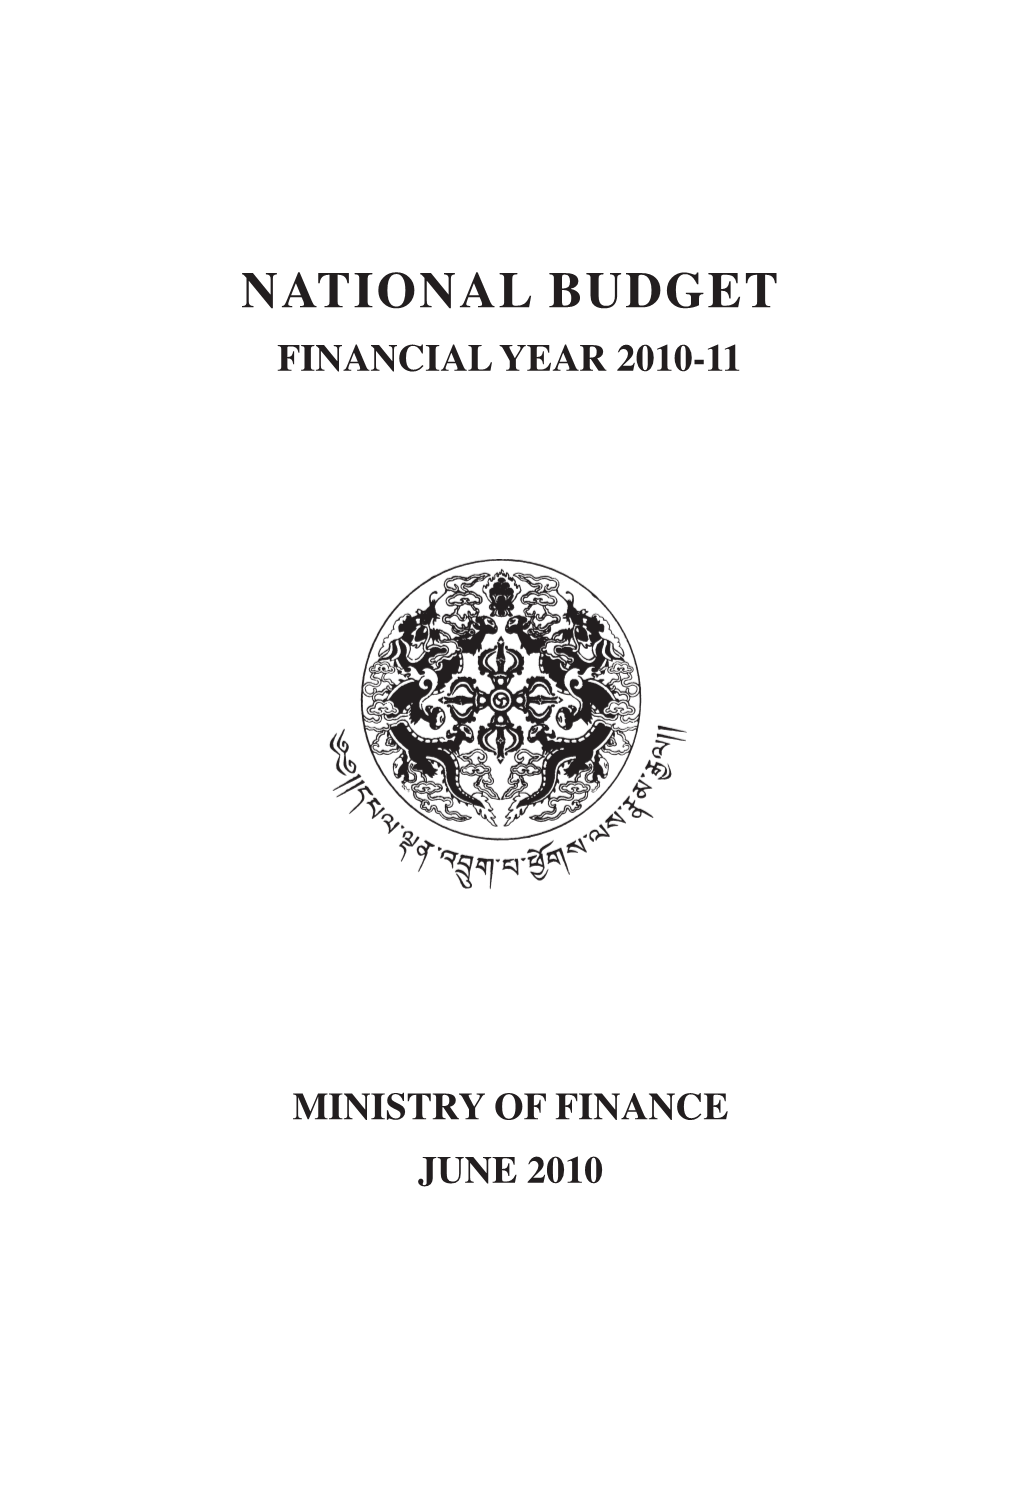 Budget Report 2010-2011